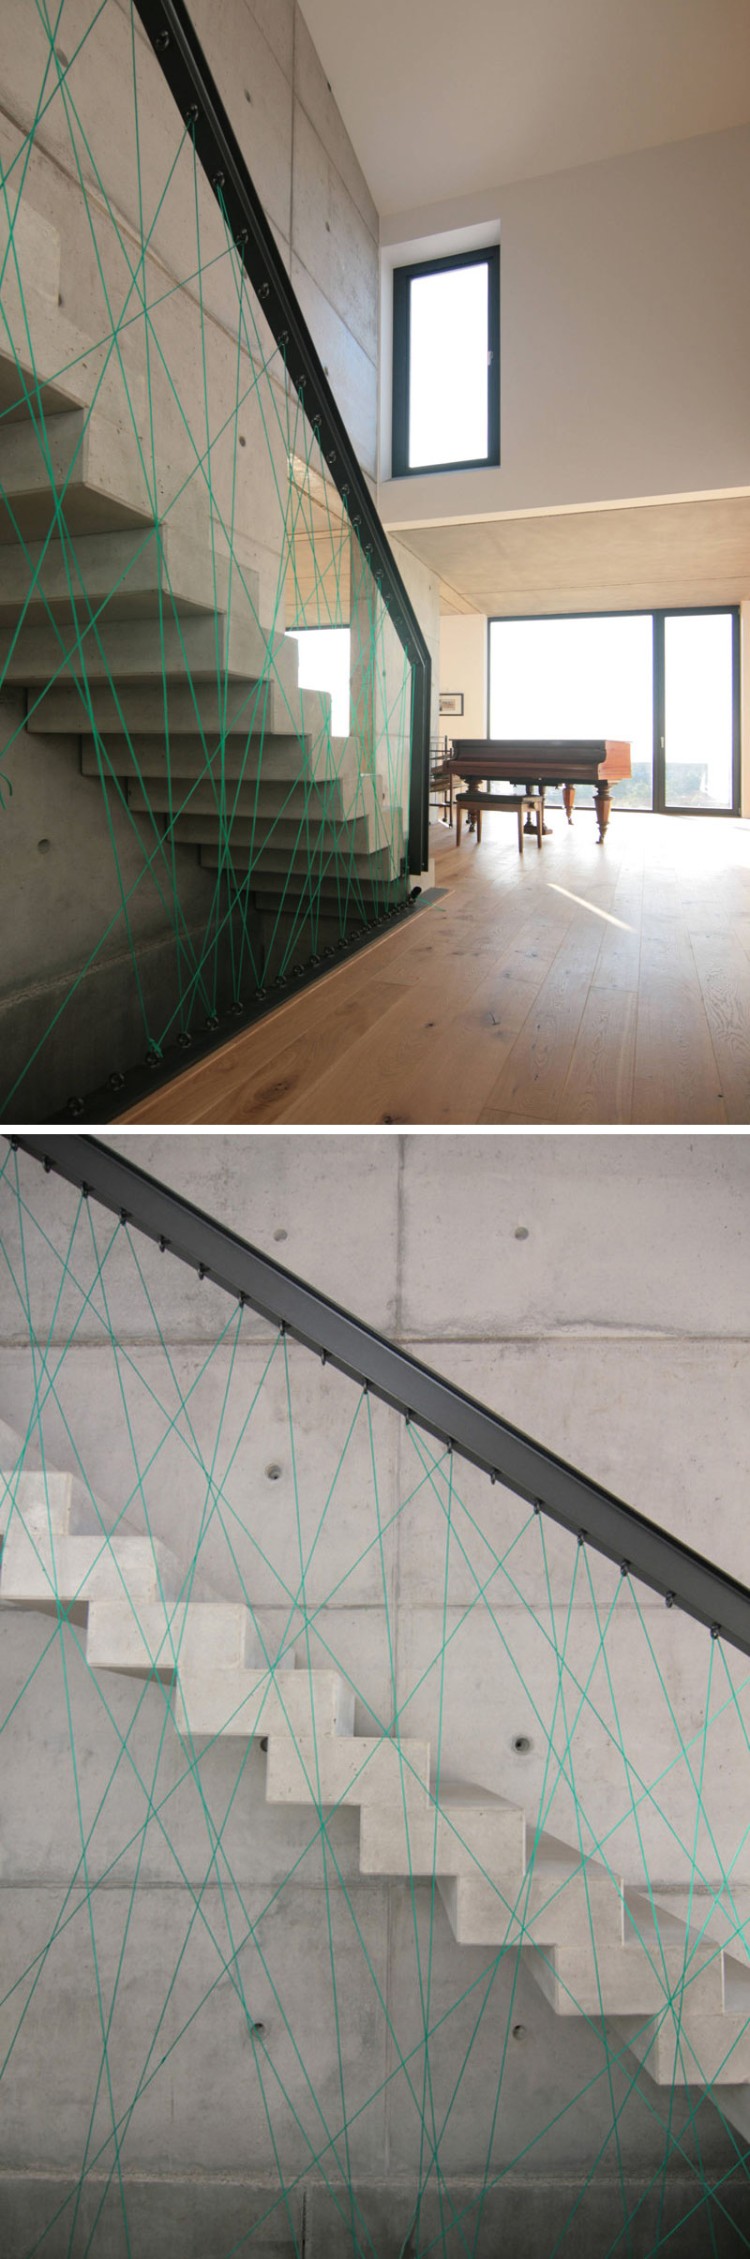 claustra escalier garde corps cordes idée innovante aménagement intérieur